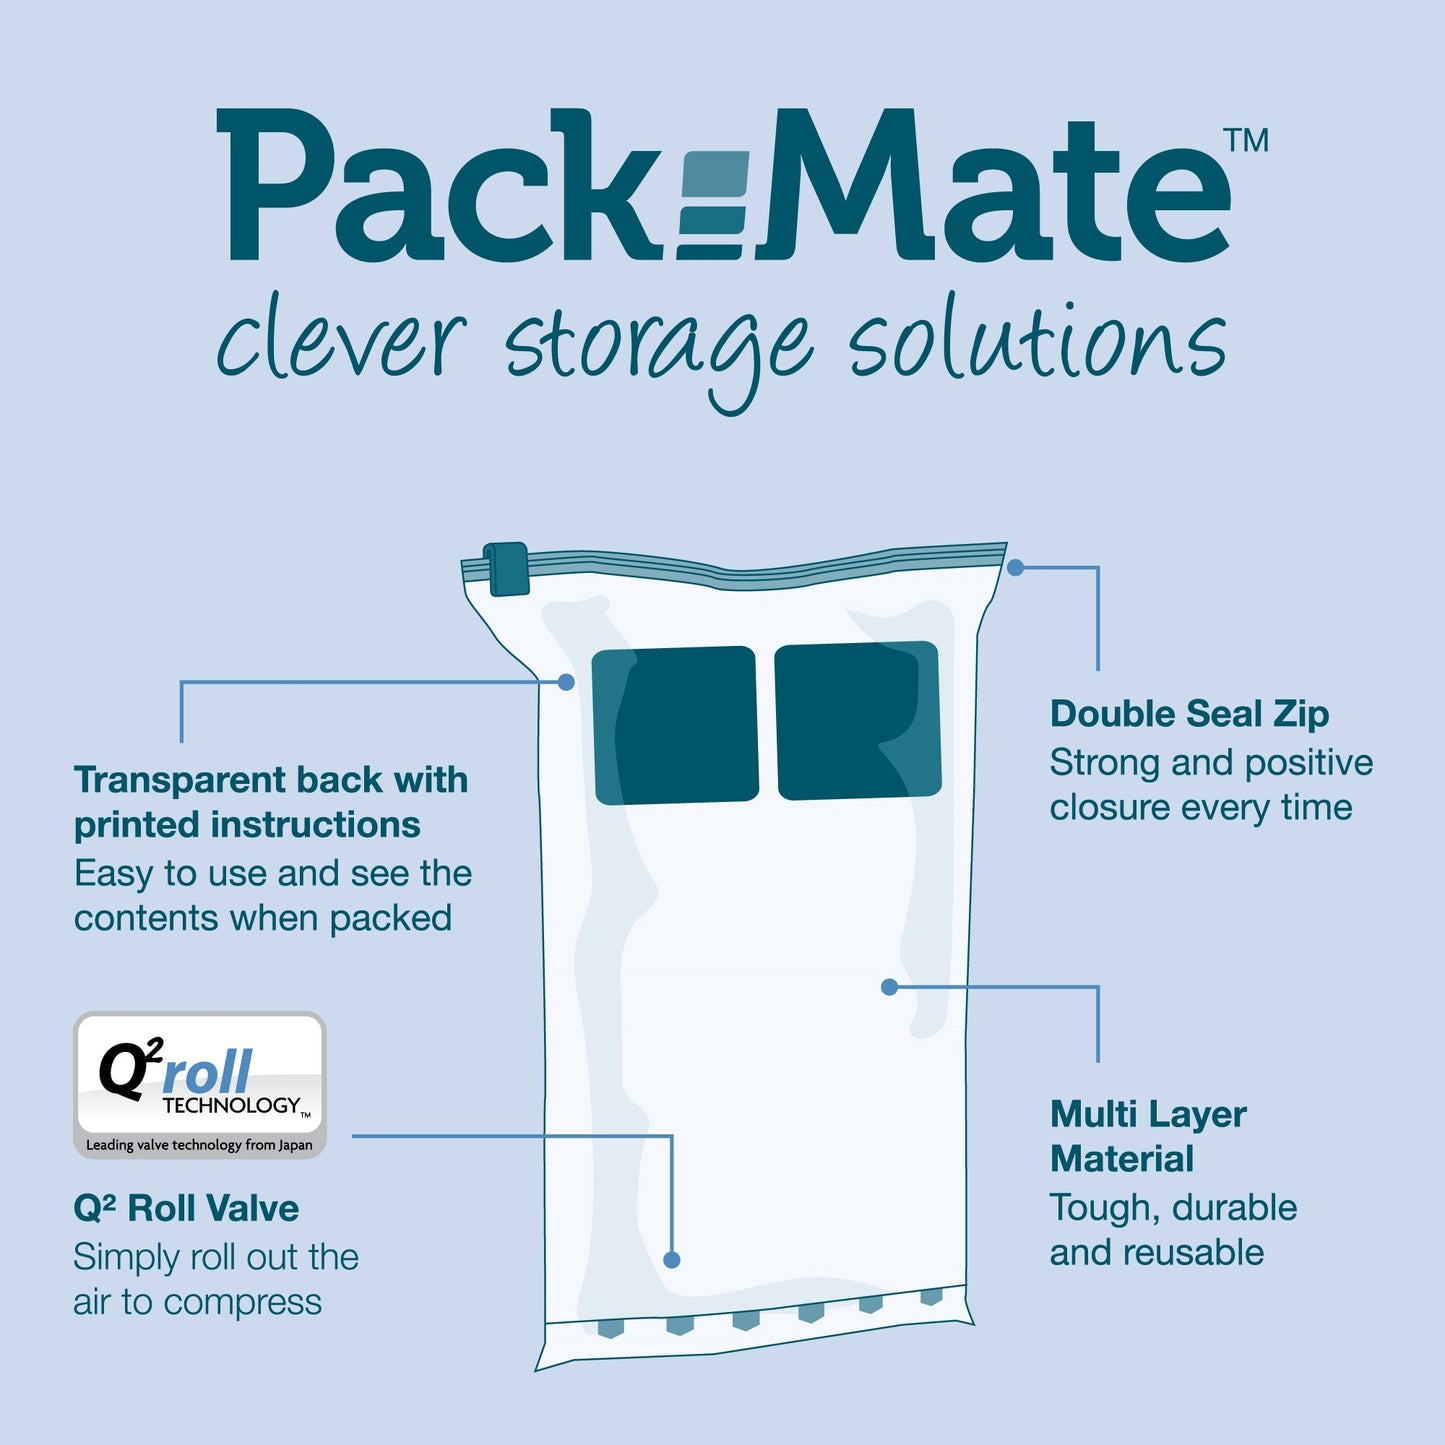 Packmate 2pc MEDIUM Travel Roll Storage Bag (40x50cm)